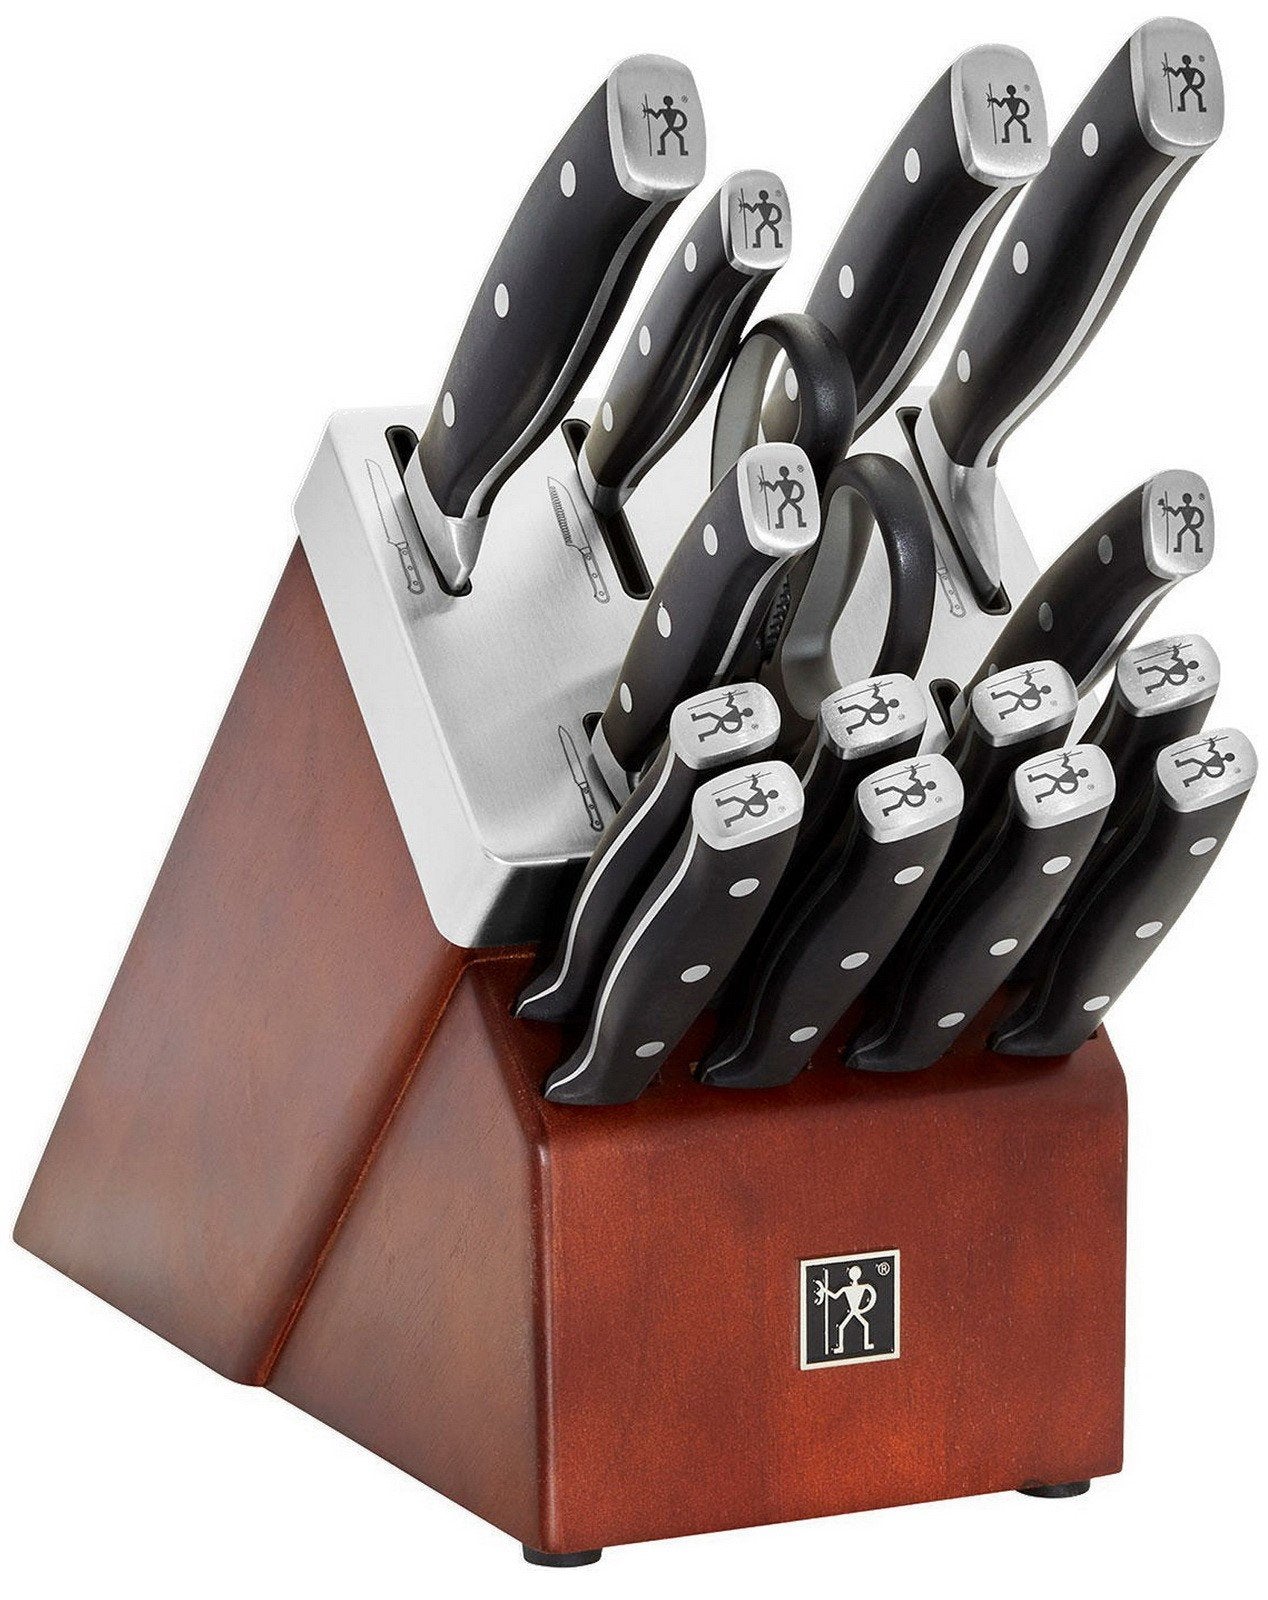 Henckels 16-Piece Self-Sharpening Knife Block Set